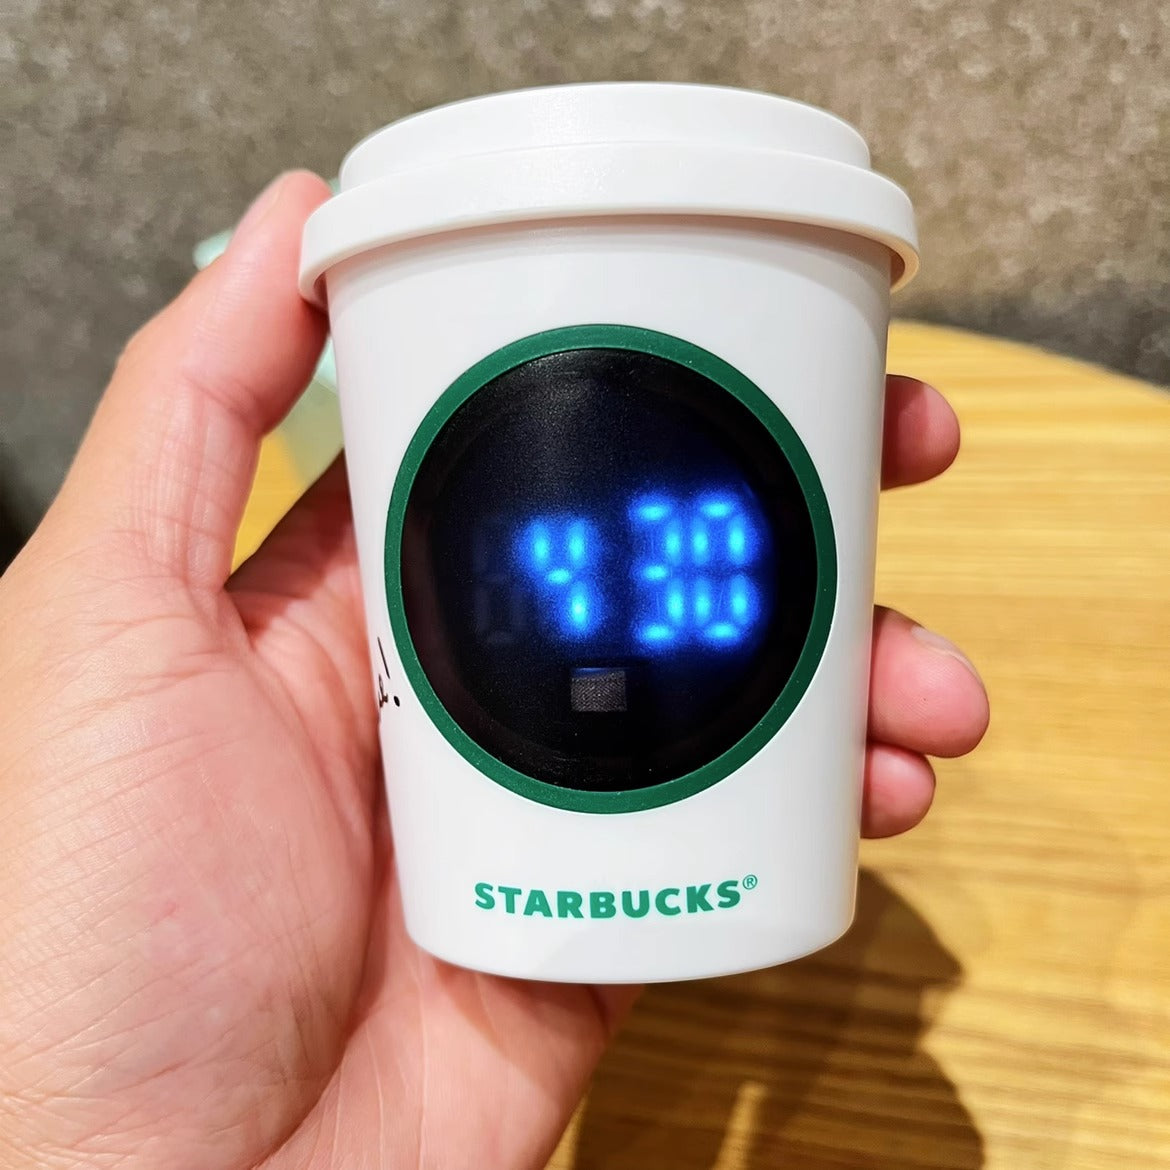 Starbucks 23 Summer LED clock or timer ornament - please read all before order